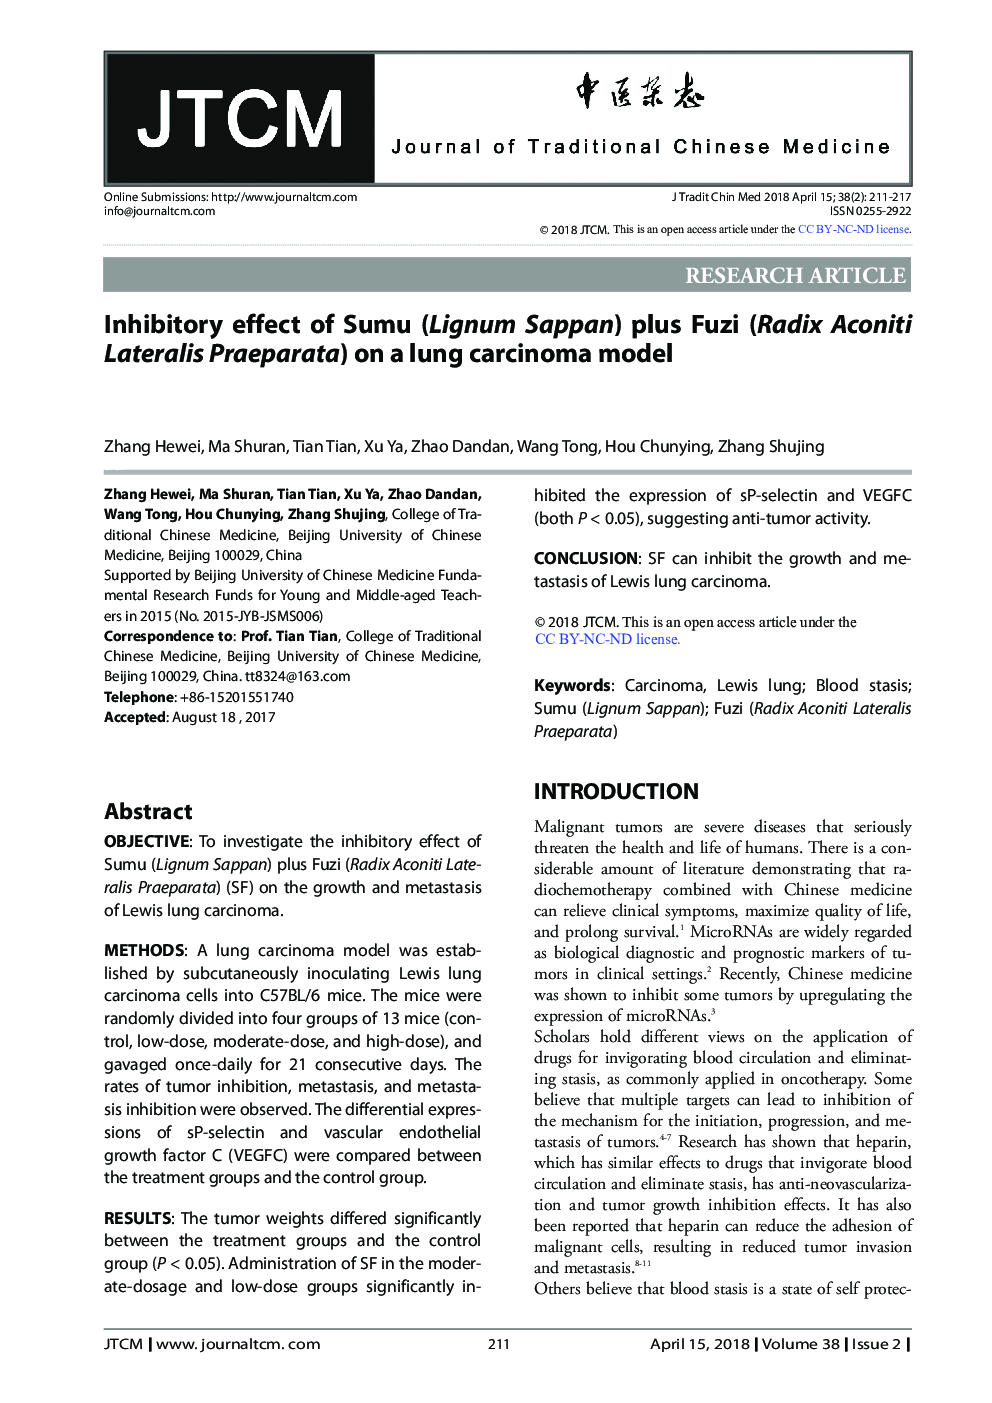 Inhibitory effect of Sumu (Lignum Sappan) plus Fuzi (Radix Aconiti Lateralis Praeparata) on a lung carcinoma model